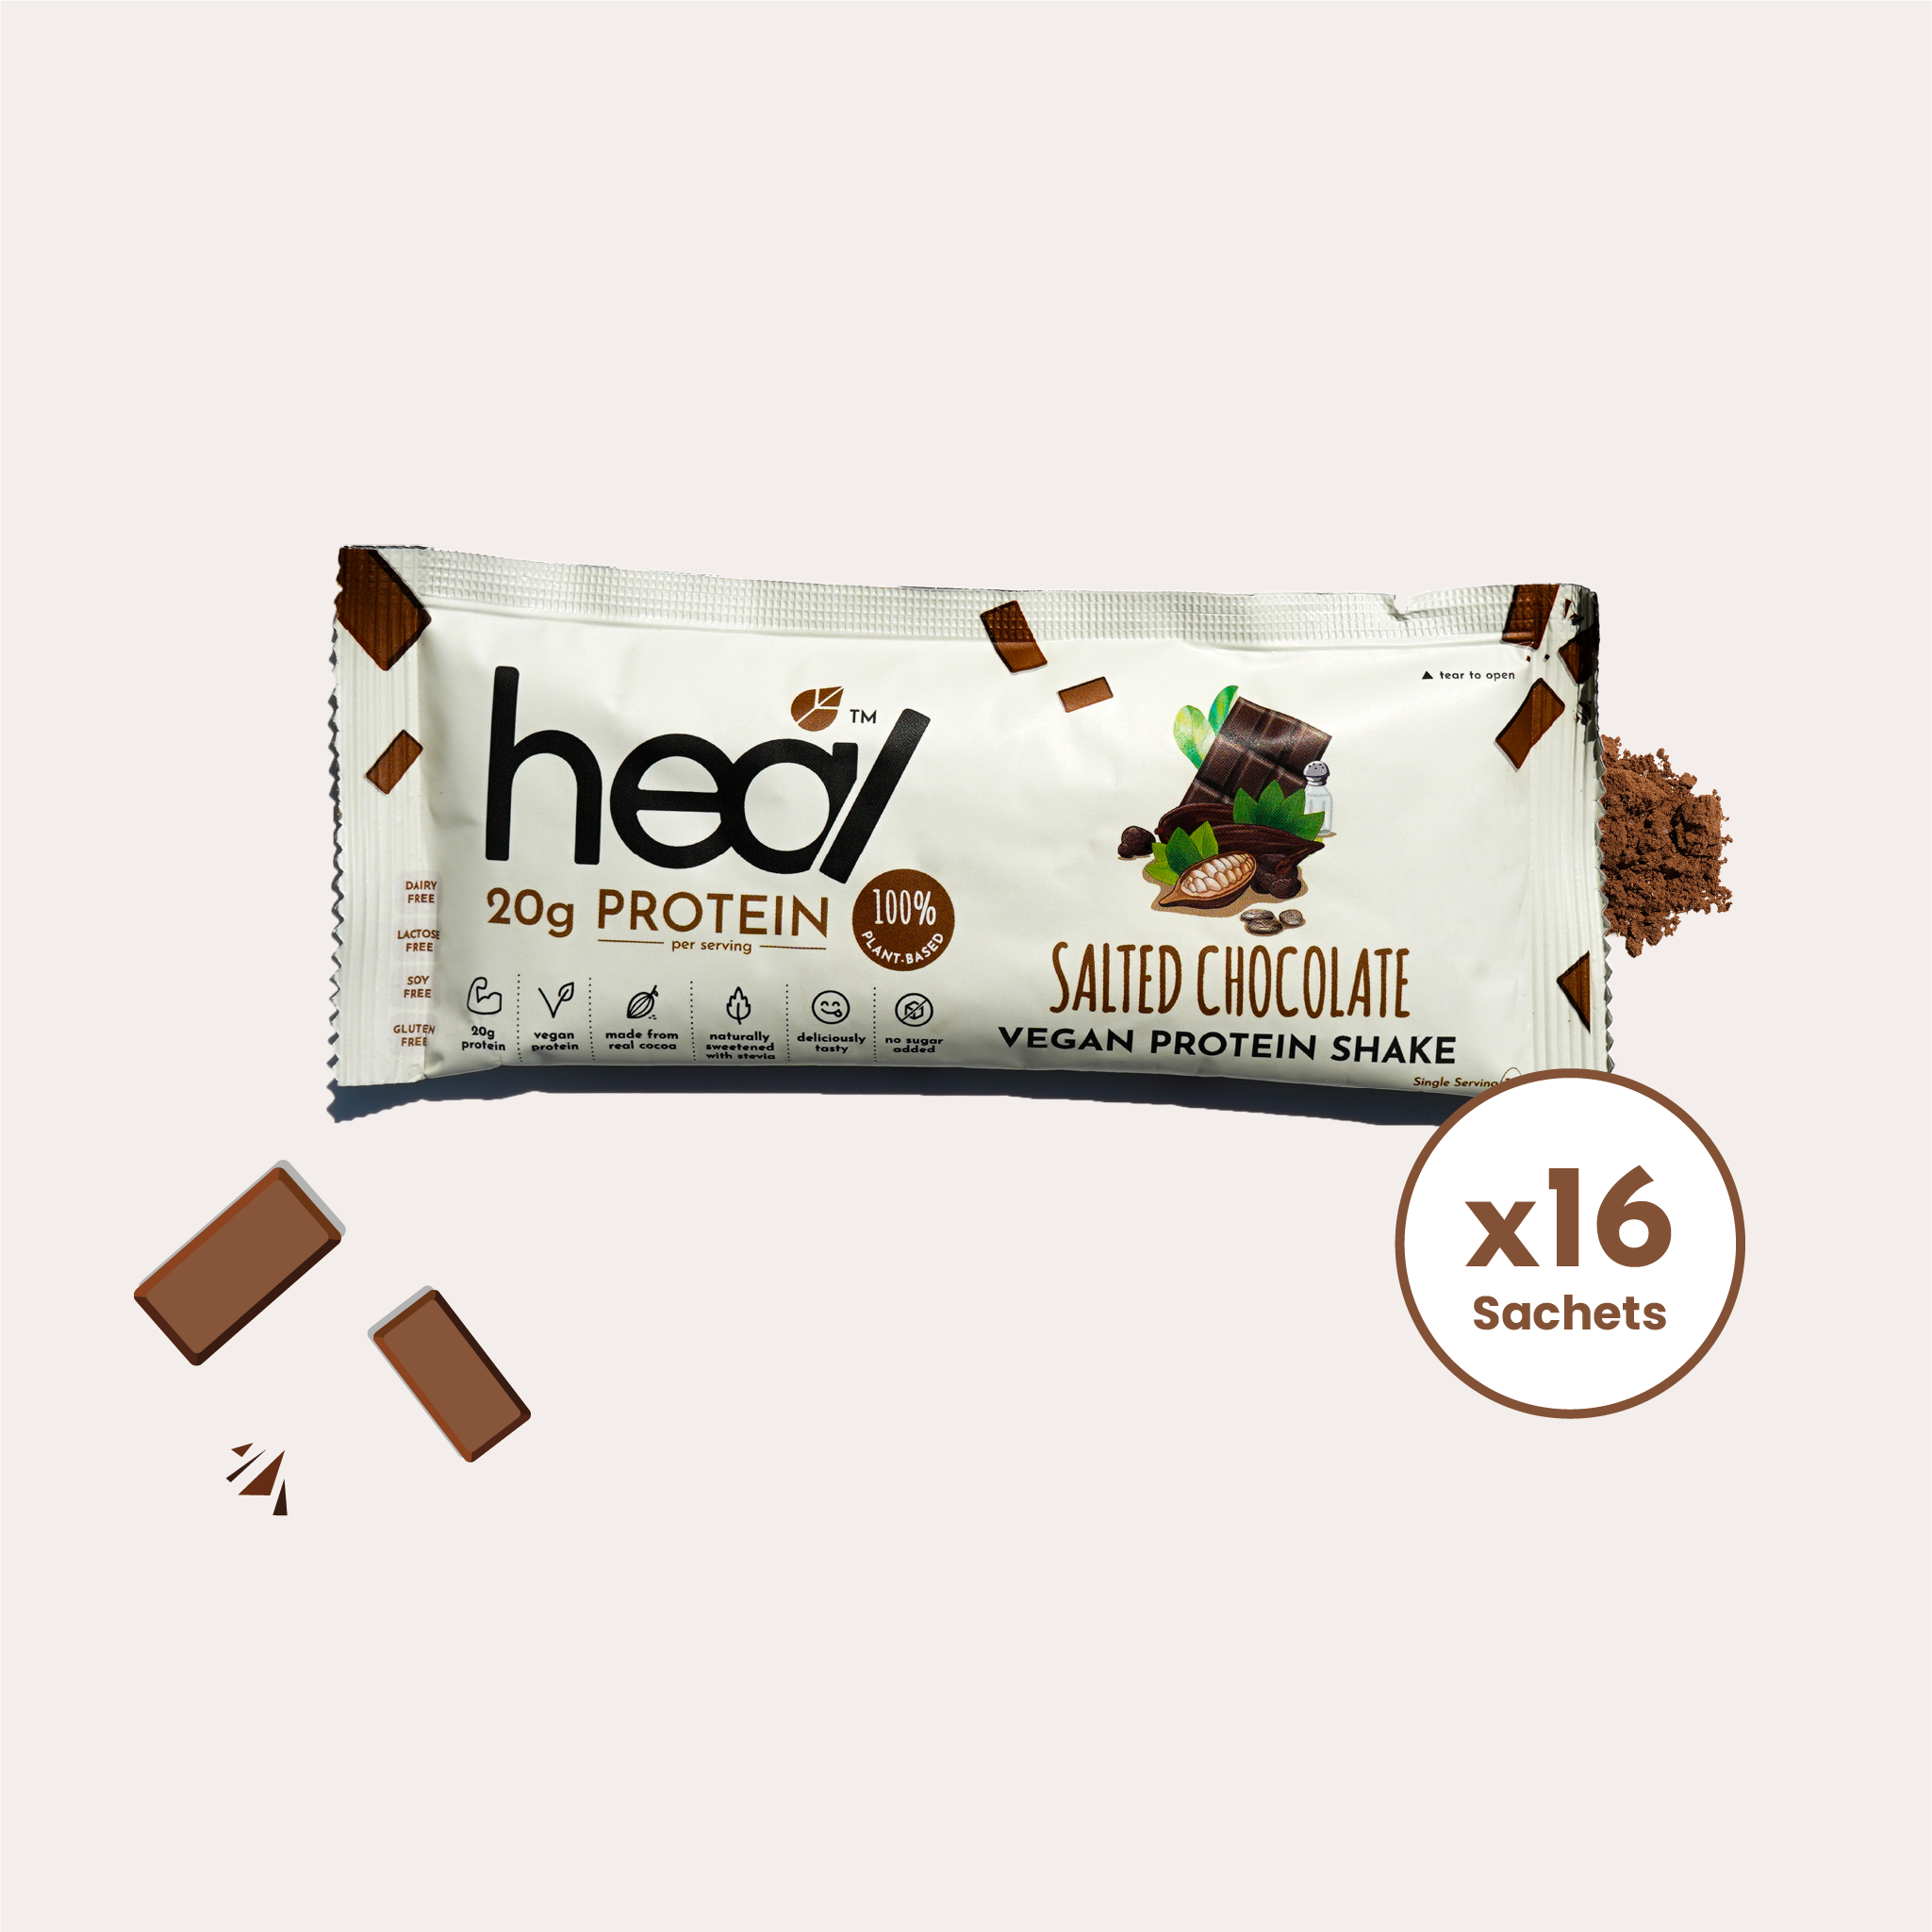 [Subscription Plan] Salted Chocolate Vegan Protein Shake, 16 Sachets (36g)